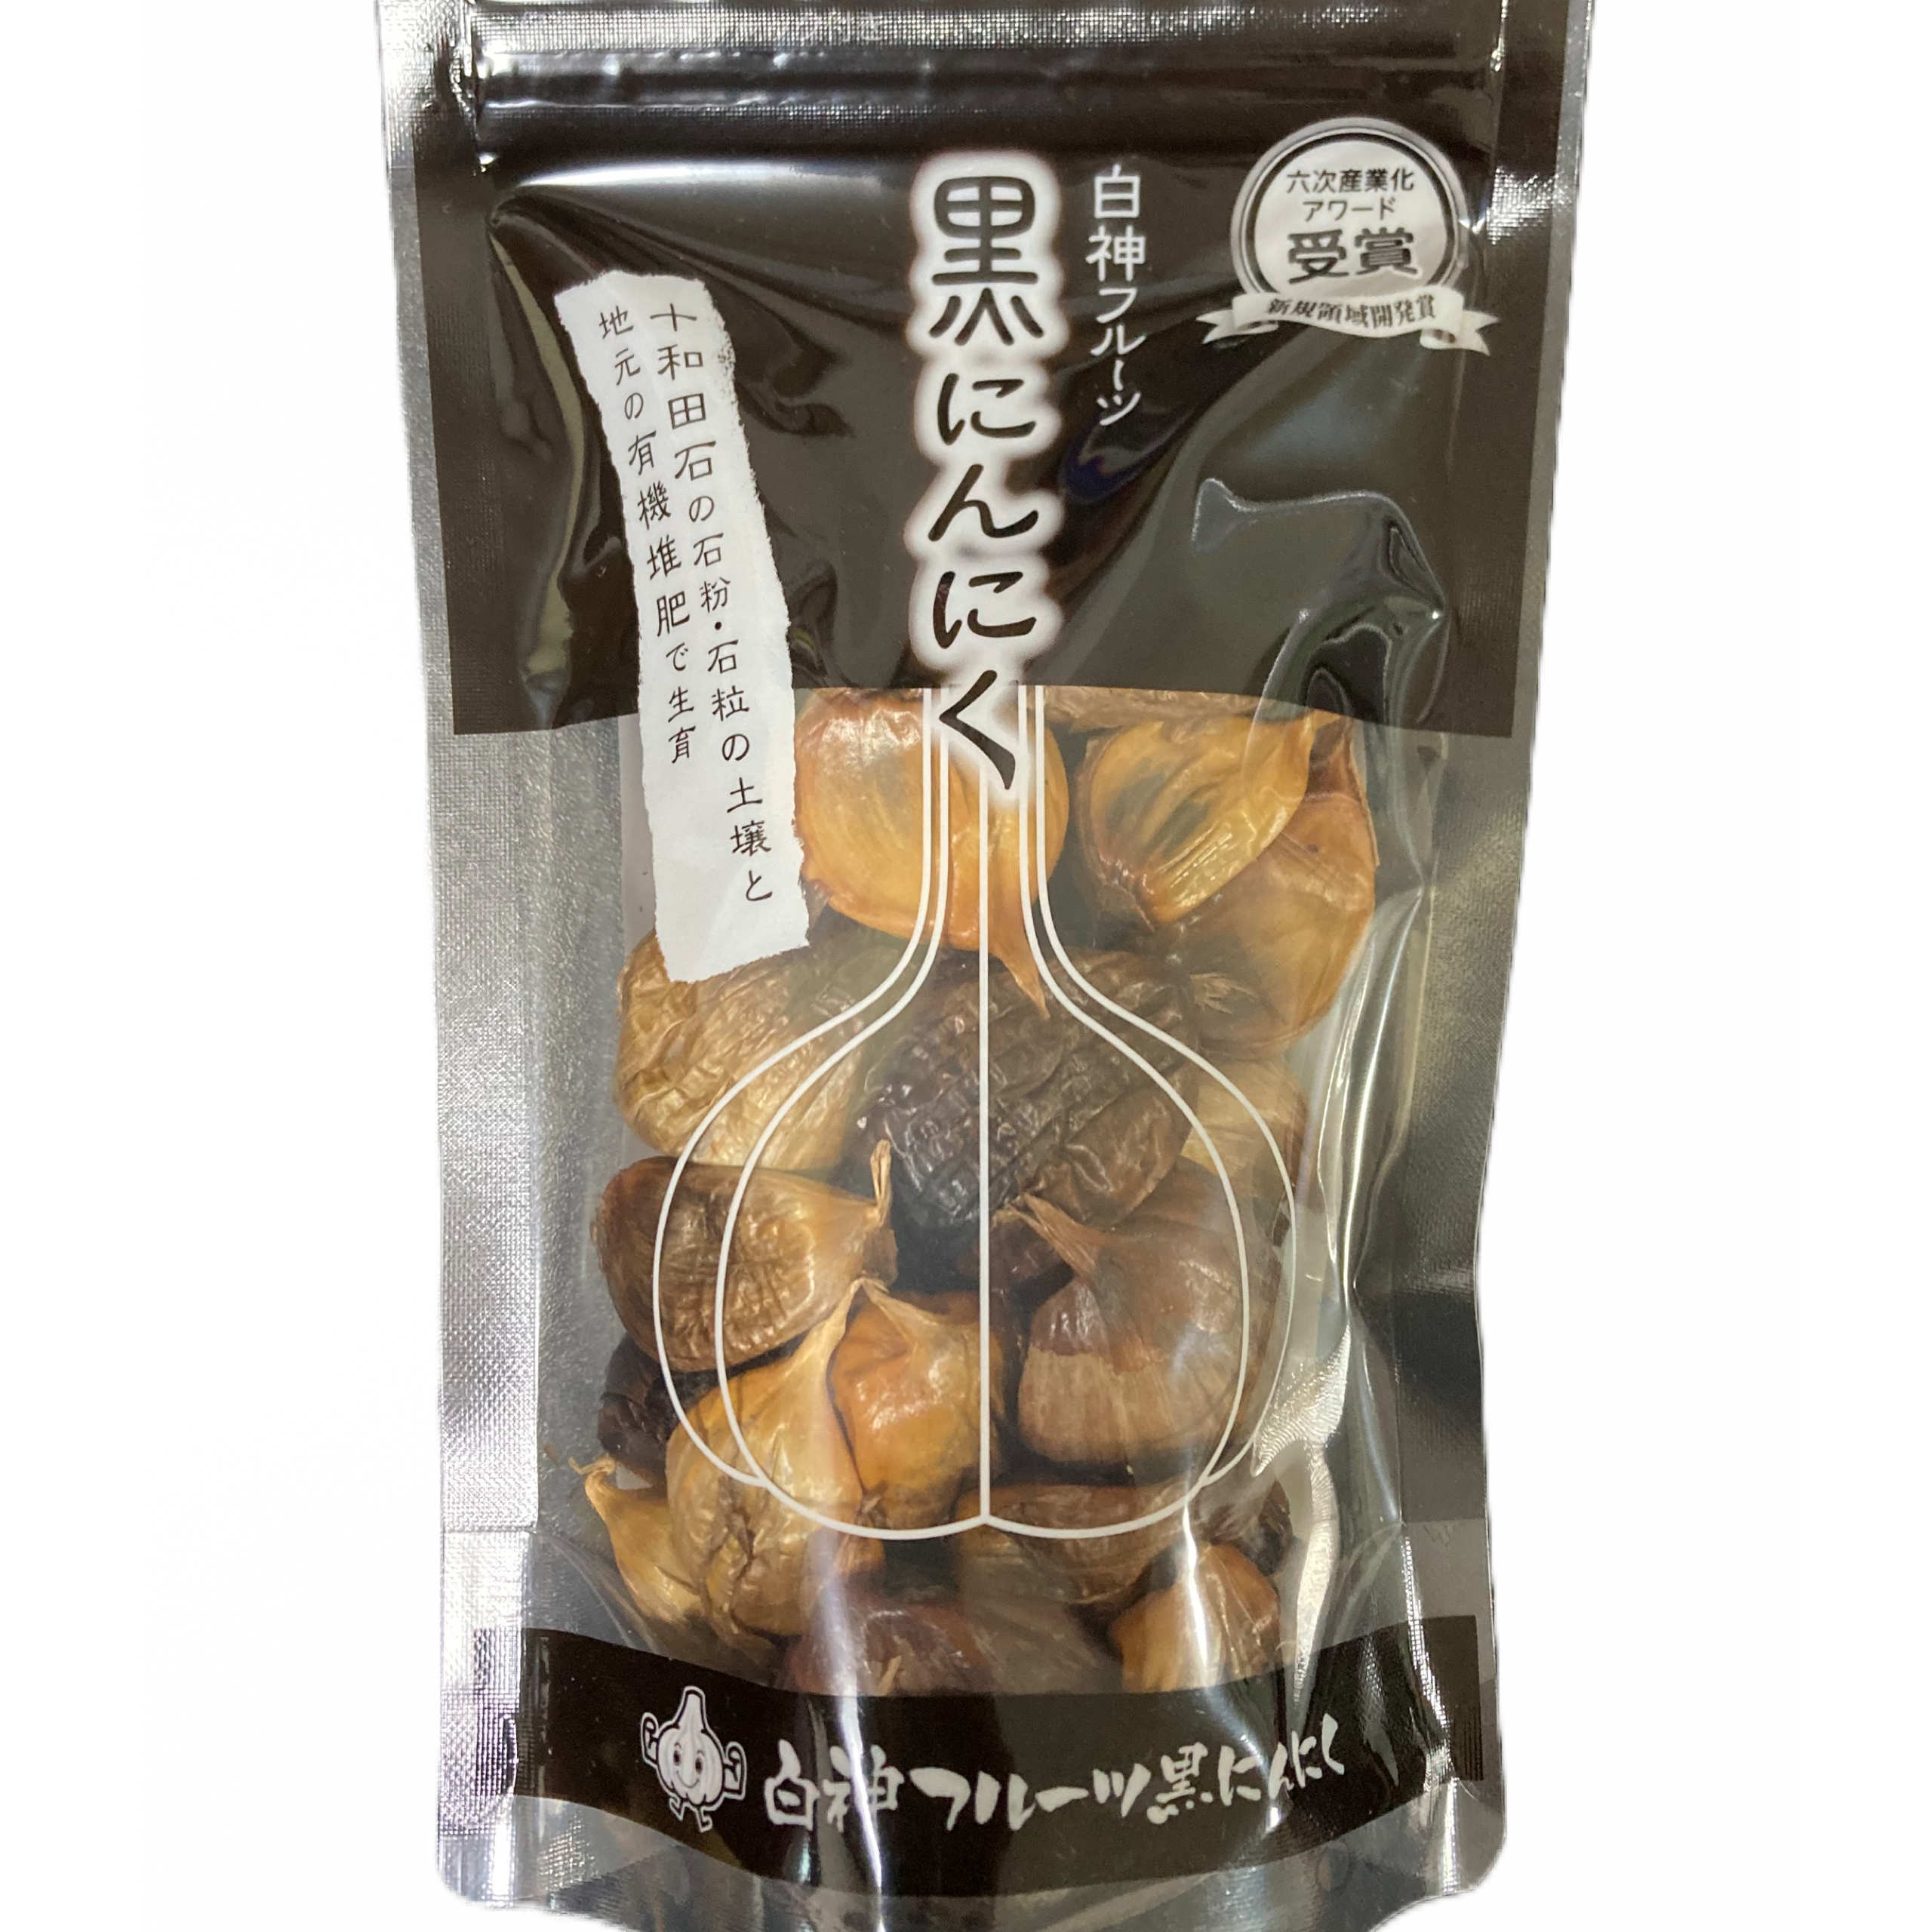 Rich Fruity Taste Black Garlic 100g Made in Japan